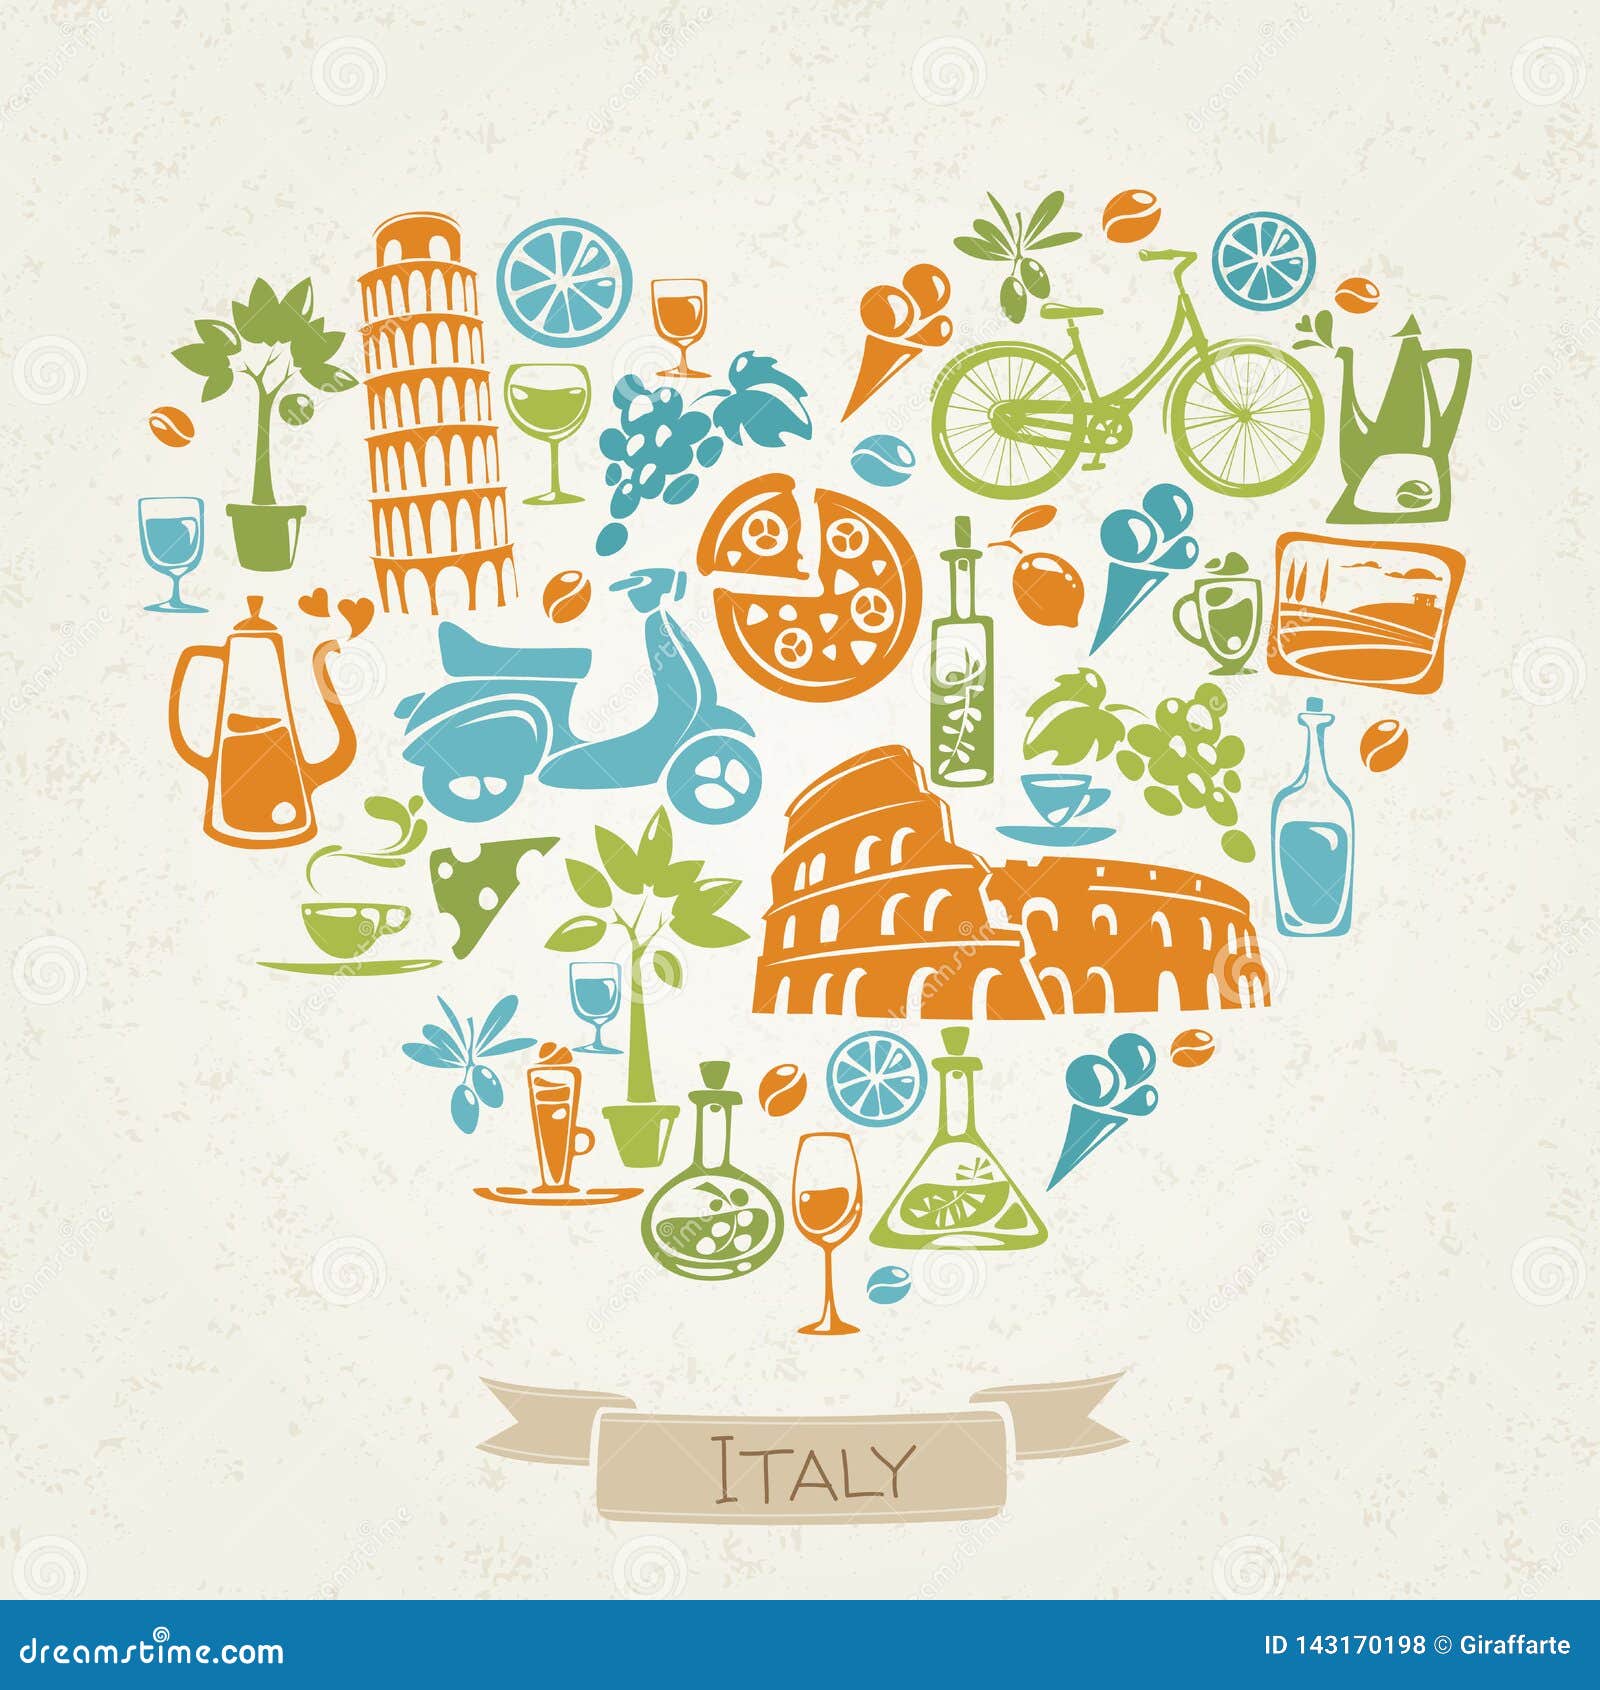 Vector I Love Italy Design with Symbols of Italian Culture. Stock ...